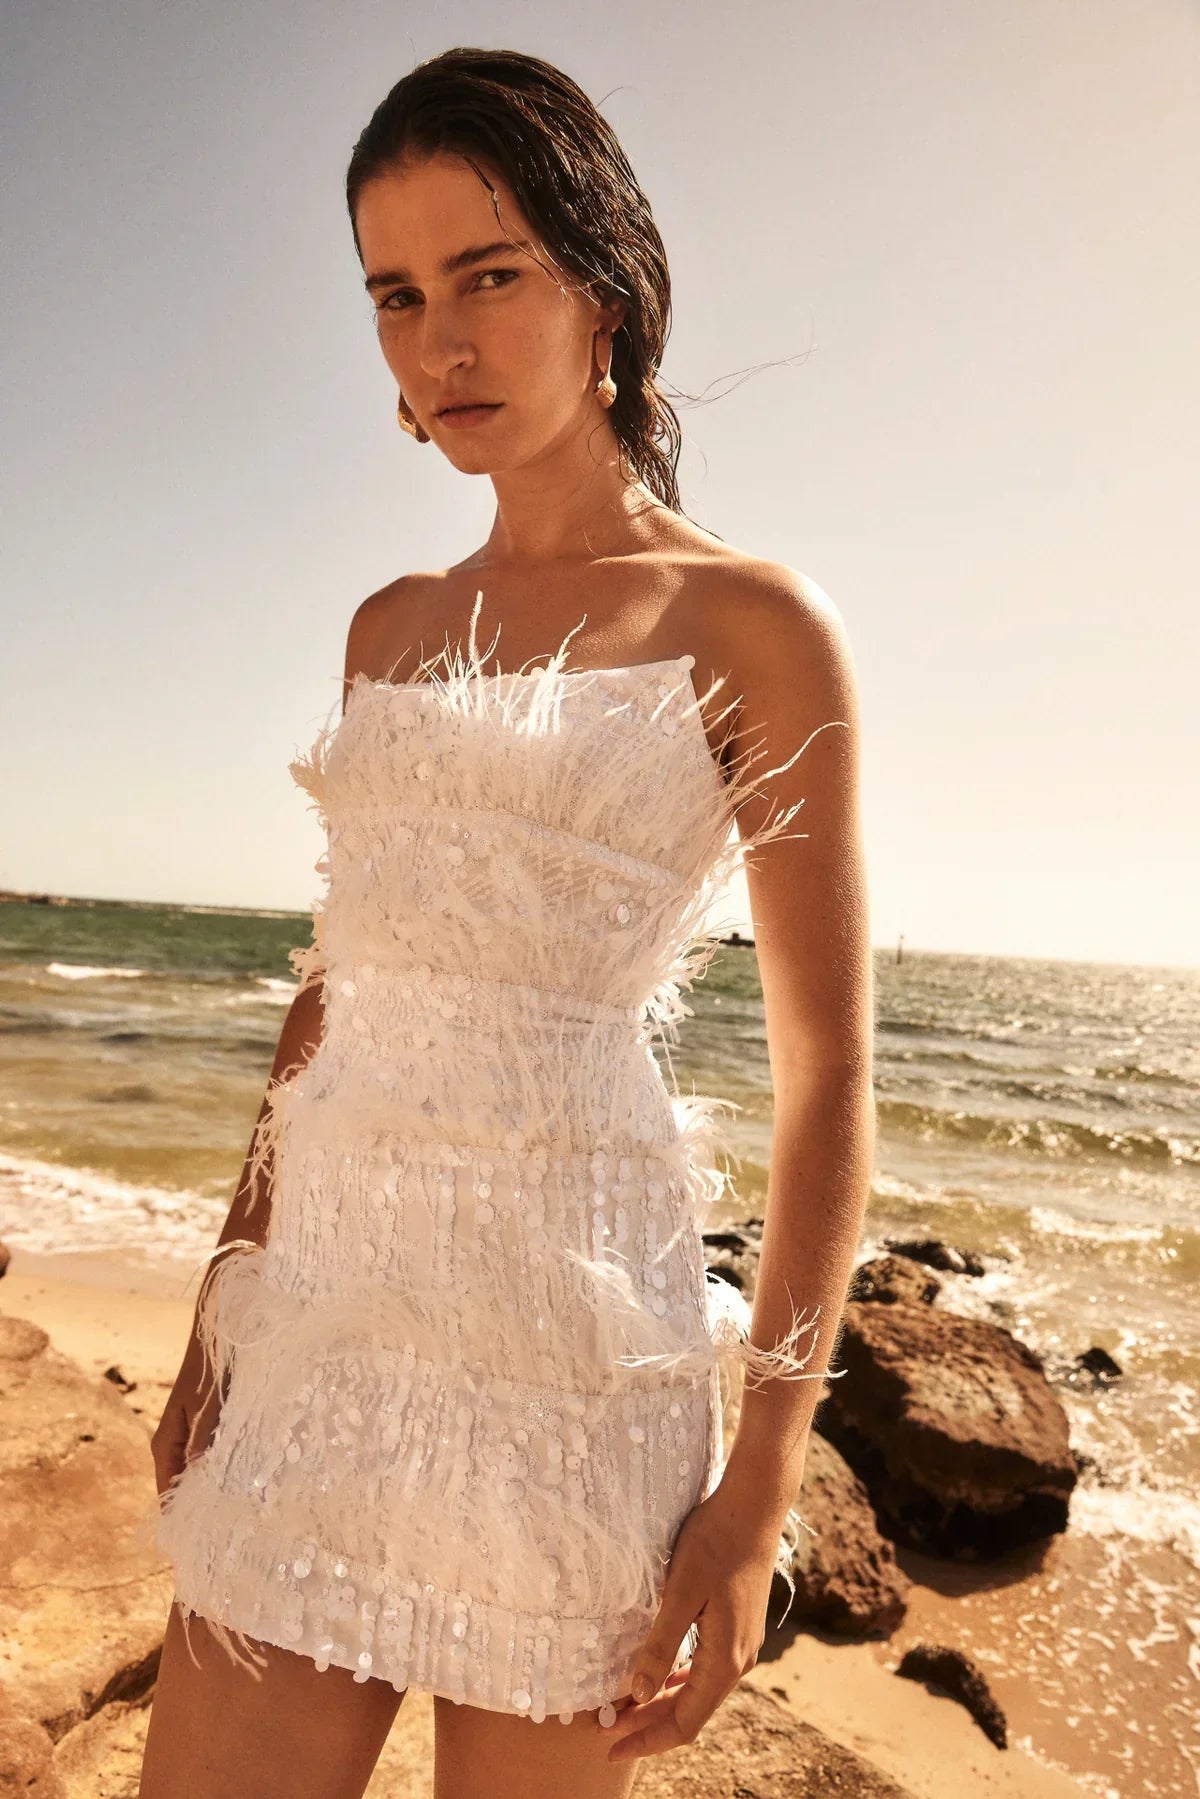 Tiffany Dress - White - JAUS